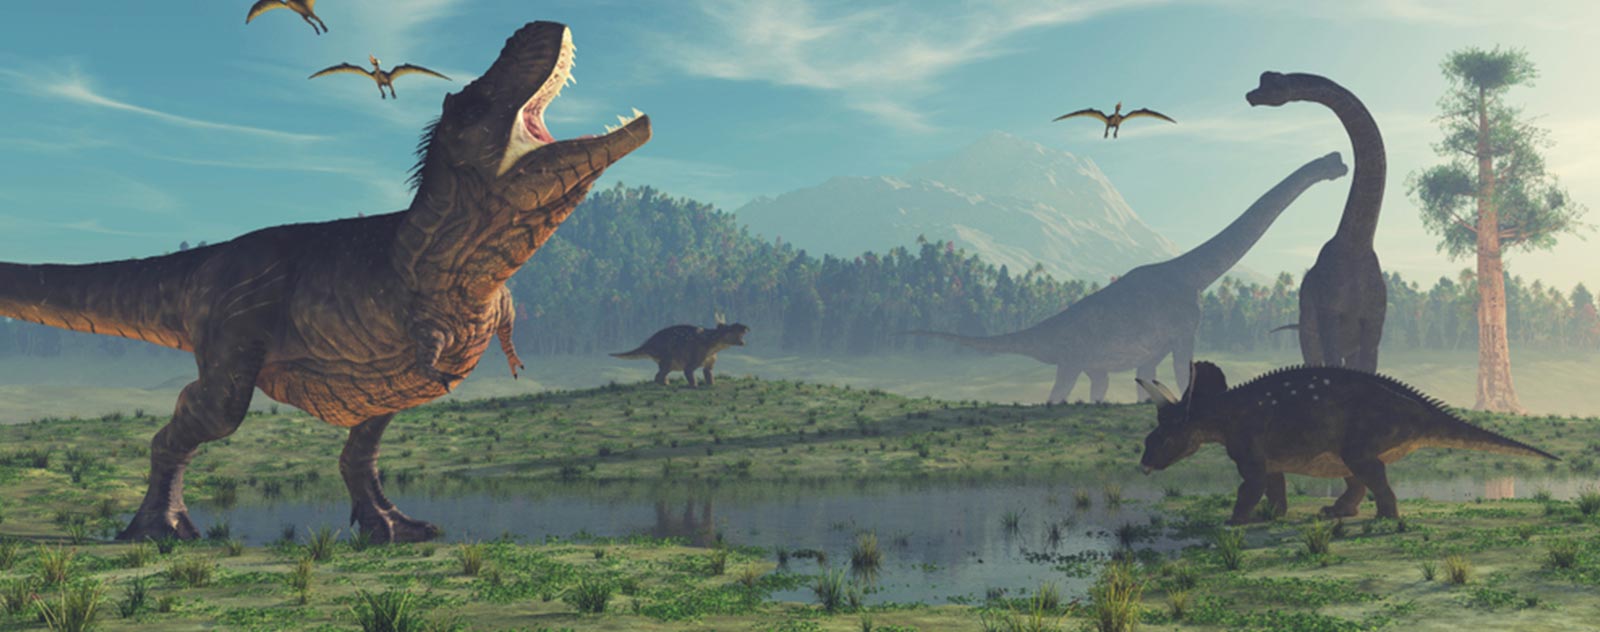 world-of-dinosaurs